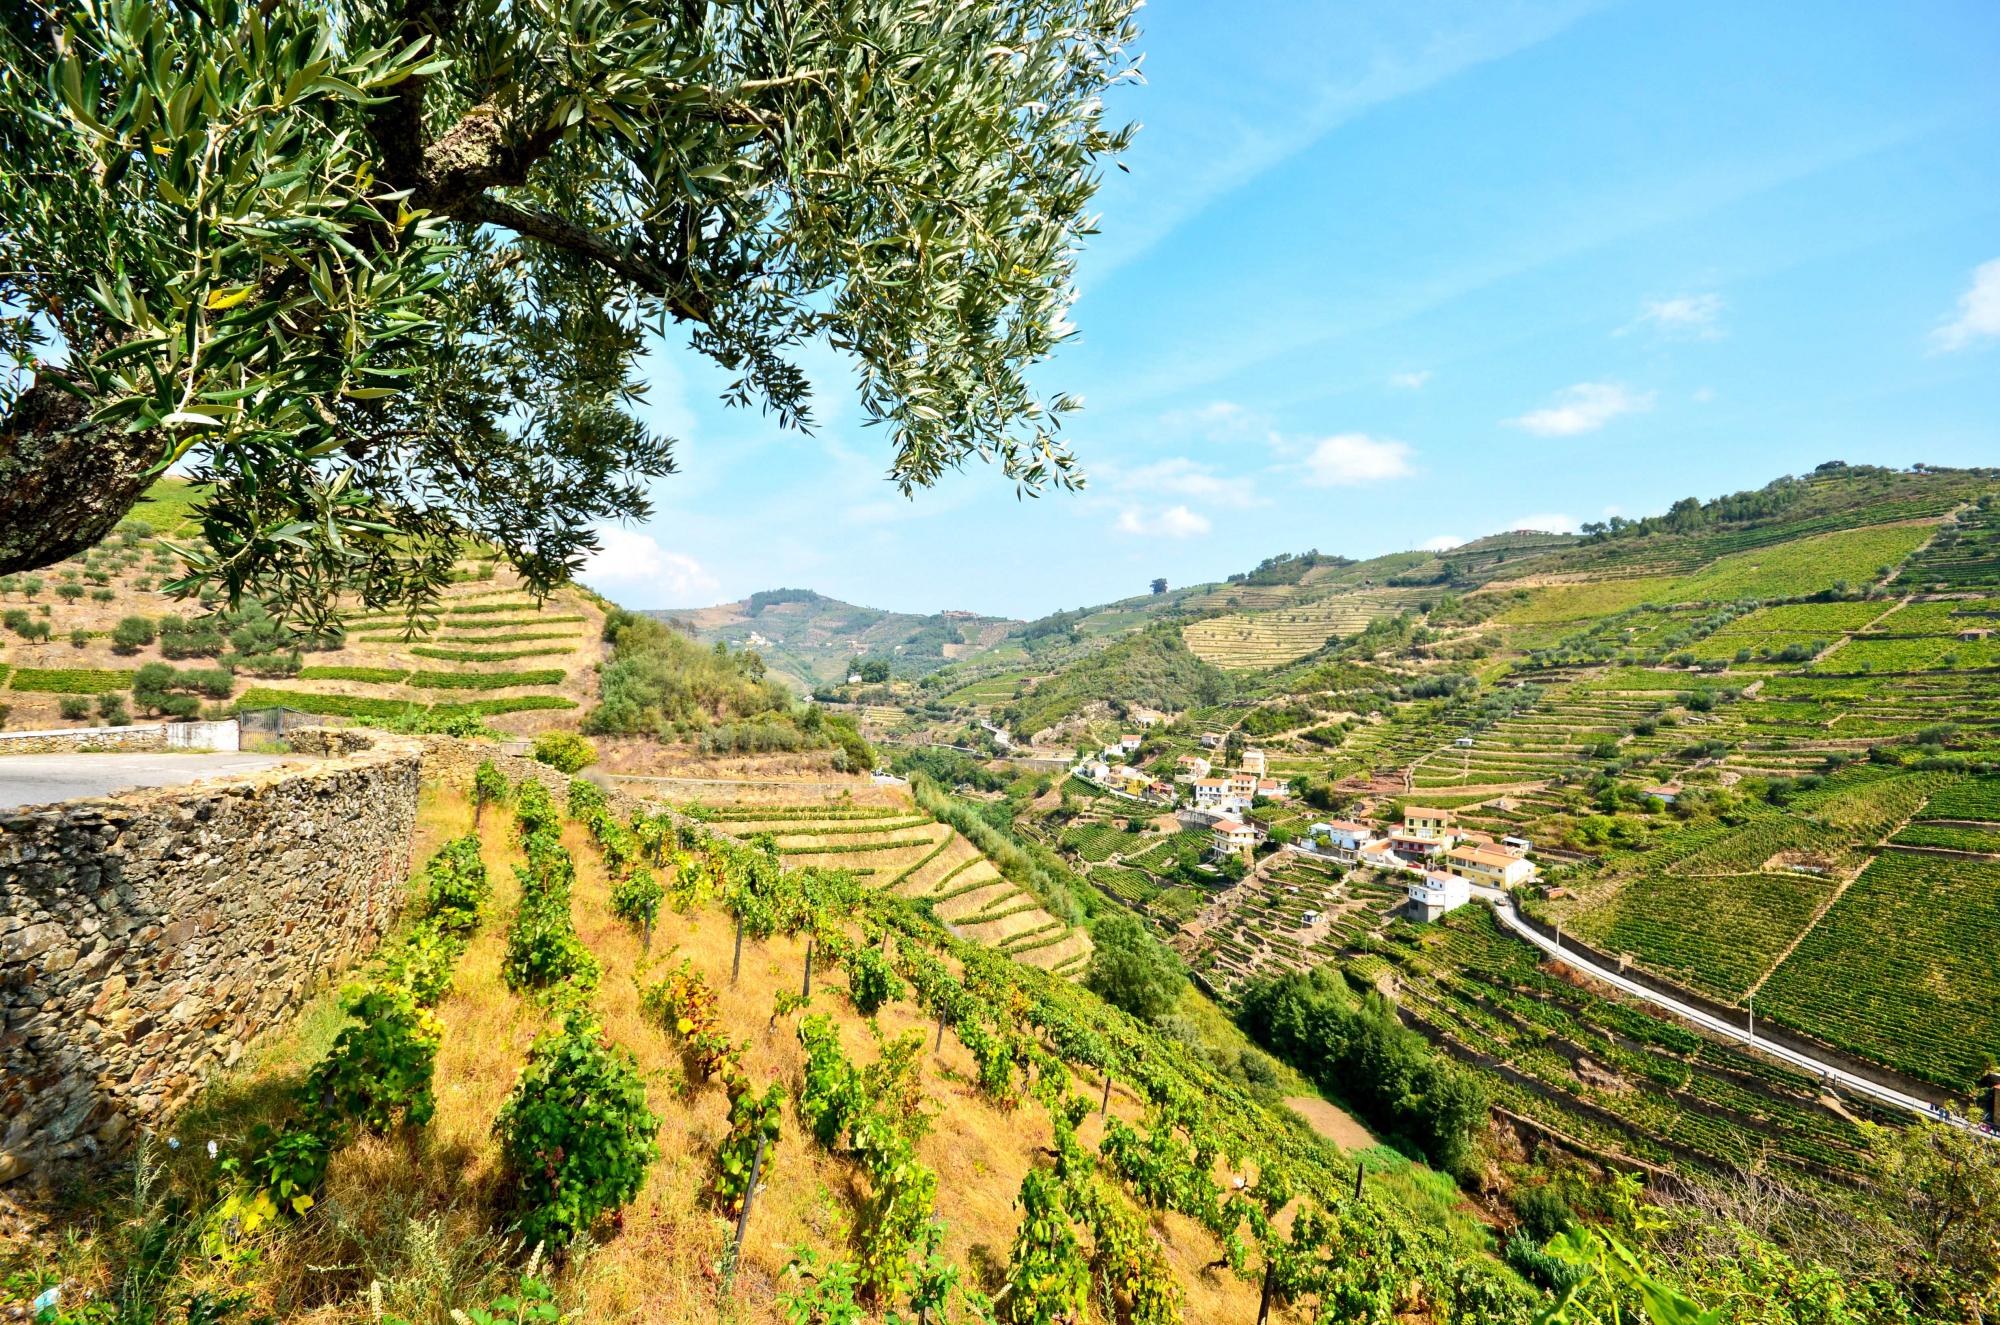 Portugal's finest wine regions